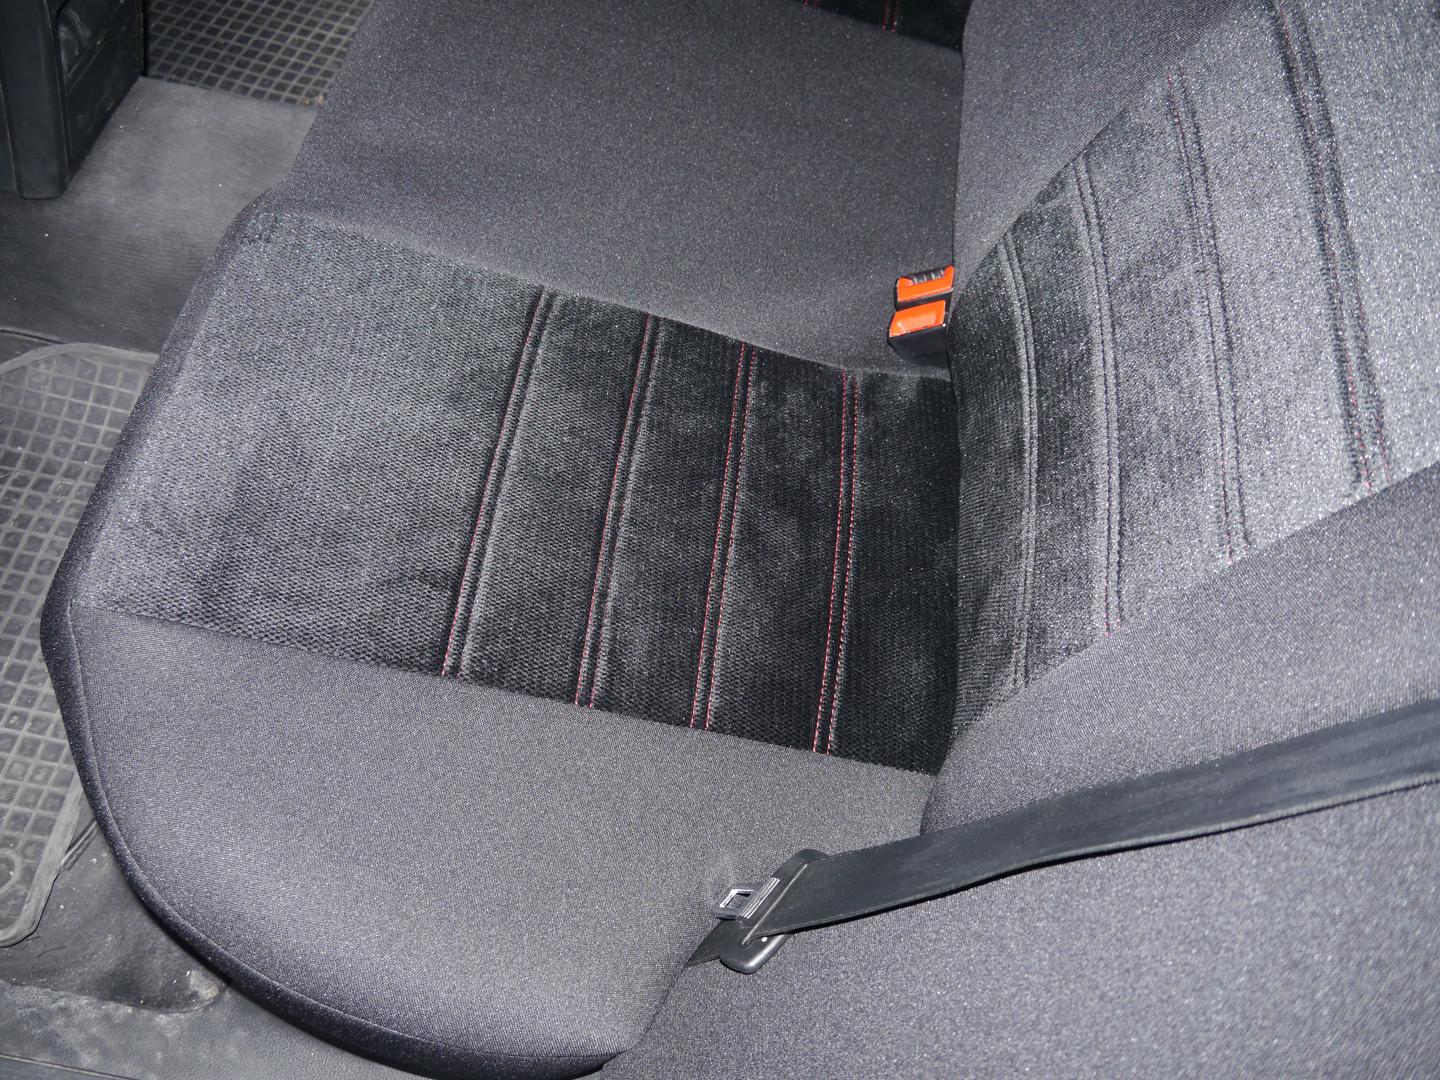 Yannaky Auto Sitzbezüge auflagen für VW Golf 6 /Golf GTI 2000-2023,Leder  Universal Sitzbezügesets Sitzschoner Komfort rutschfest Komplettset